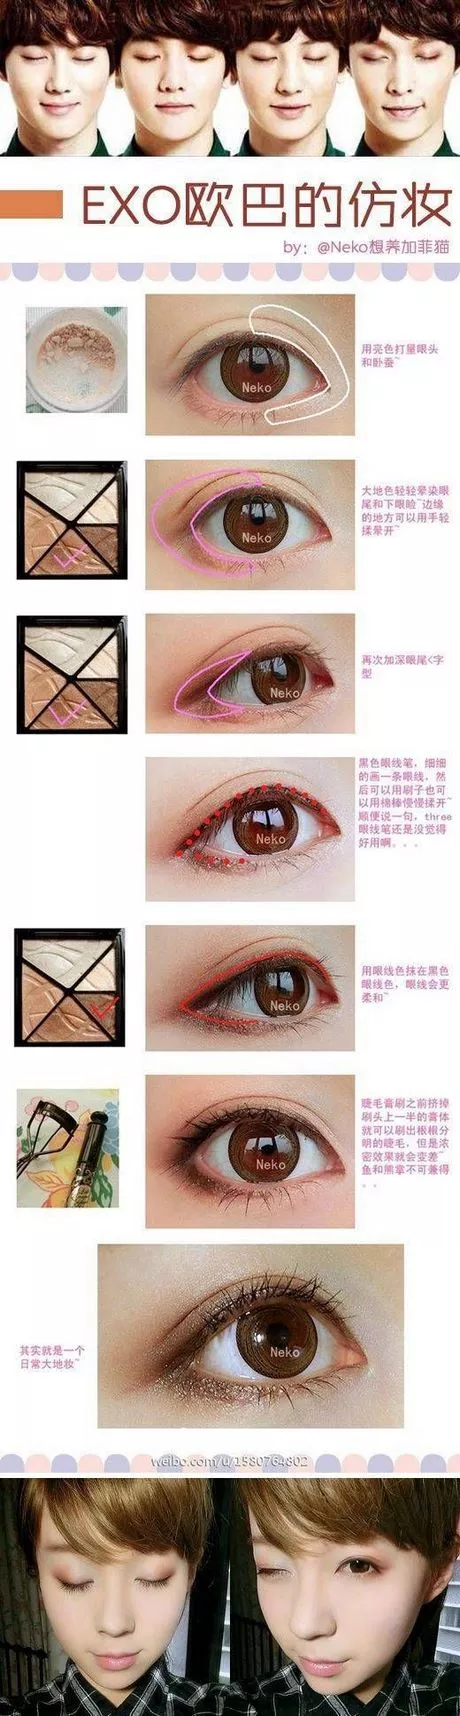 kpop-makeup-tutorial-exo-68_10-2 Kpop make-up tutorial exo